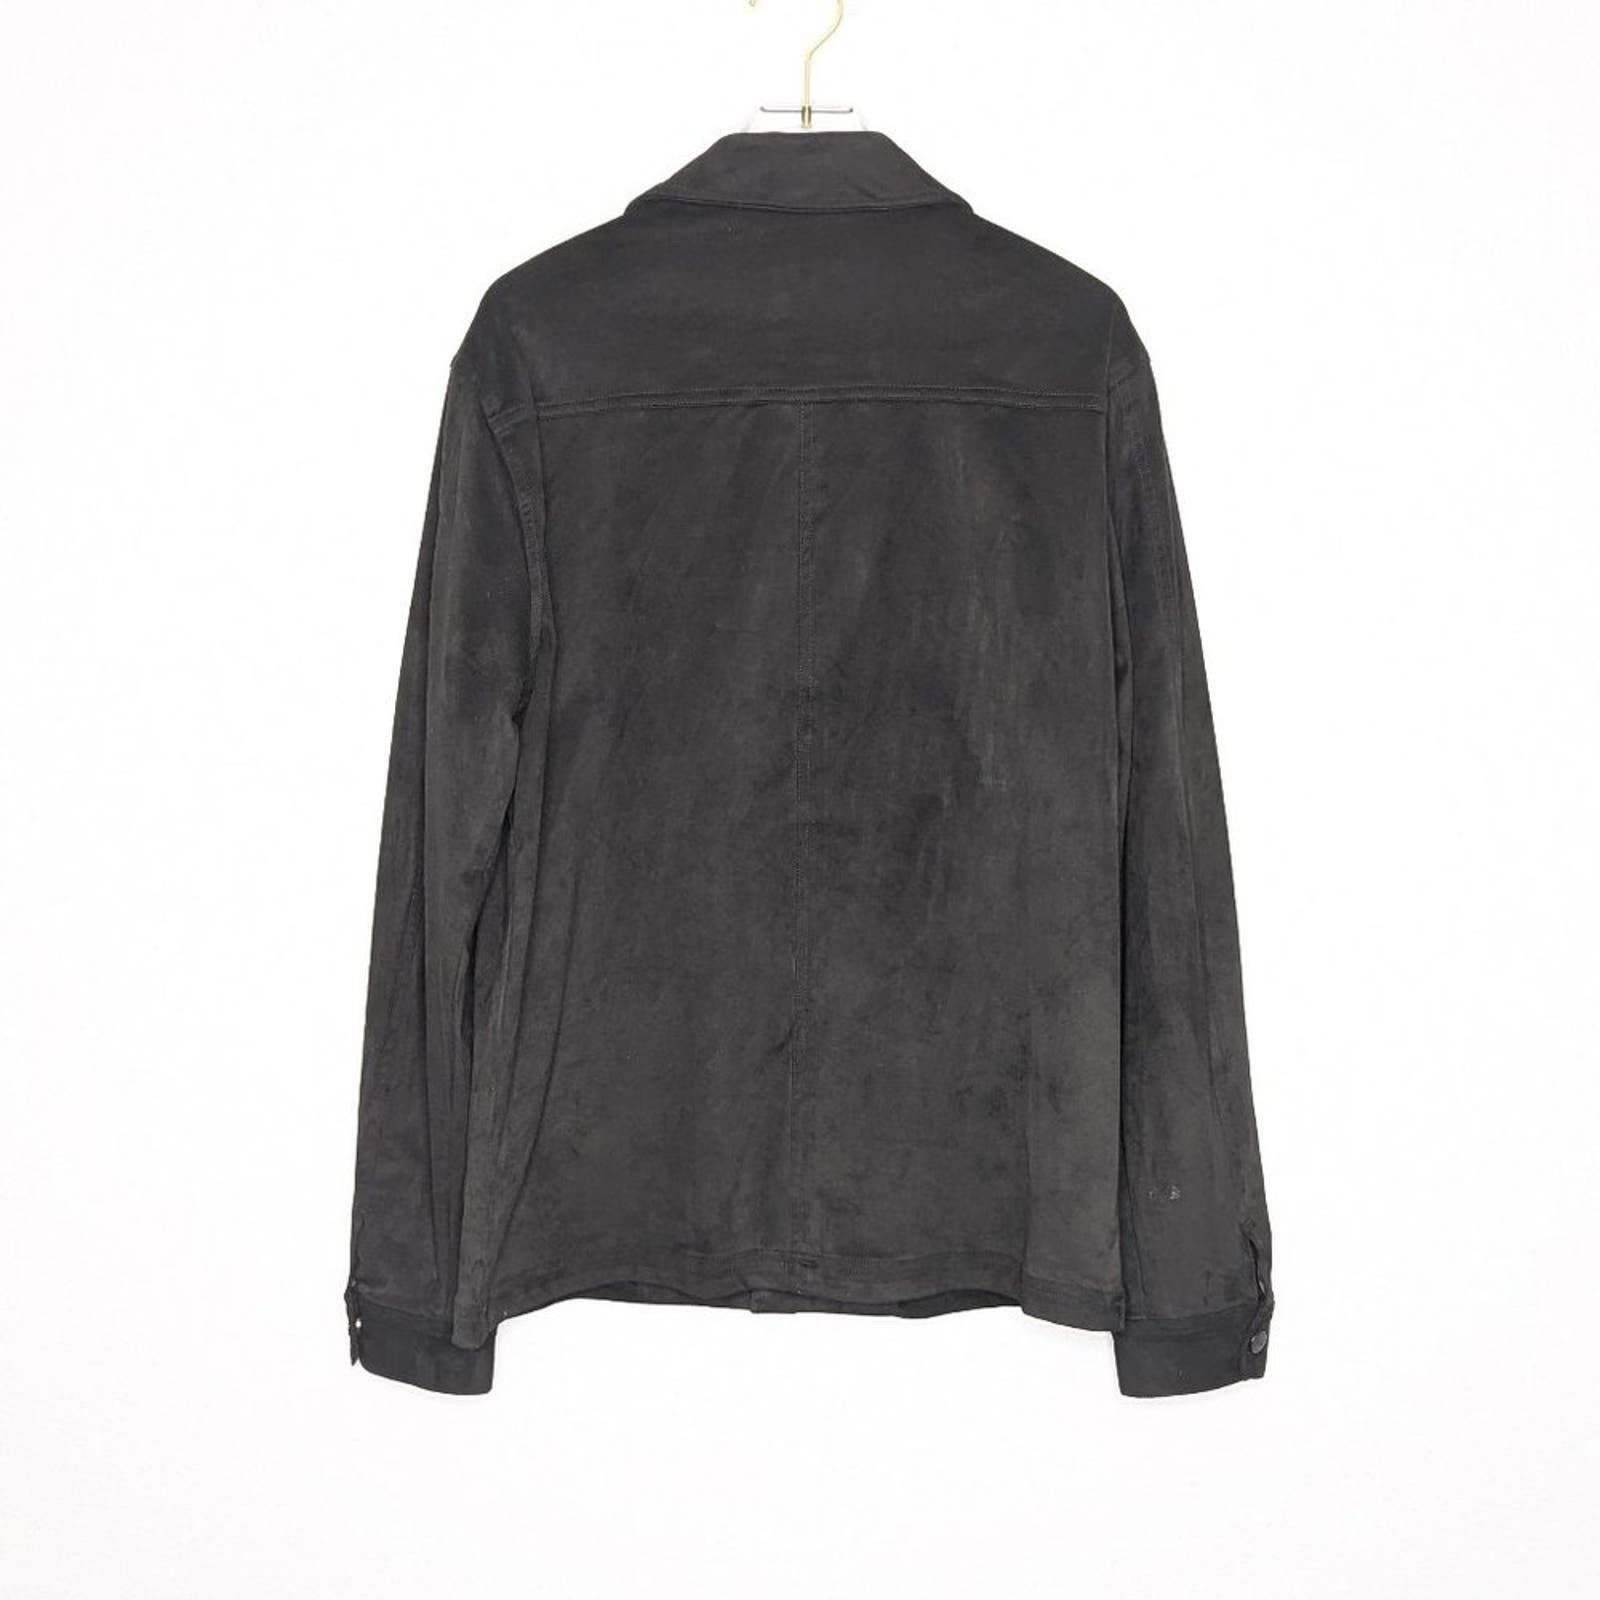 Robert Barakett Robert Barakett Black Renoir Denim Style Jacket Faux Suede S Size US S / EU 44-46 / 1 - 2 Preview